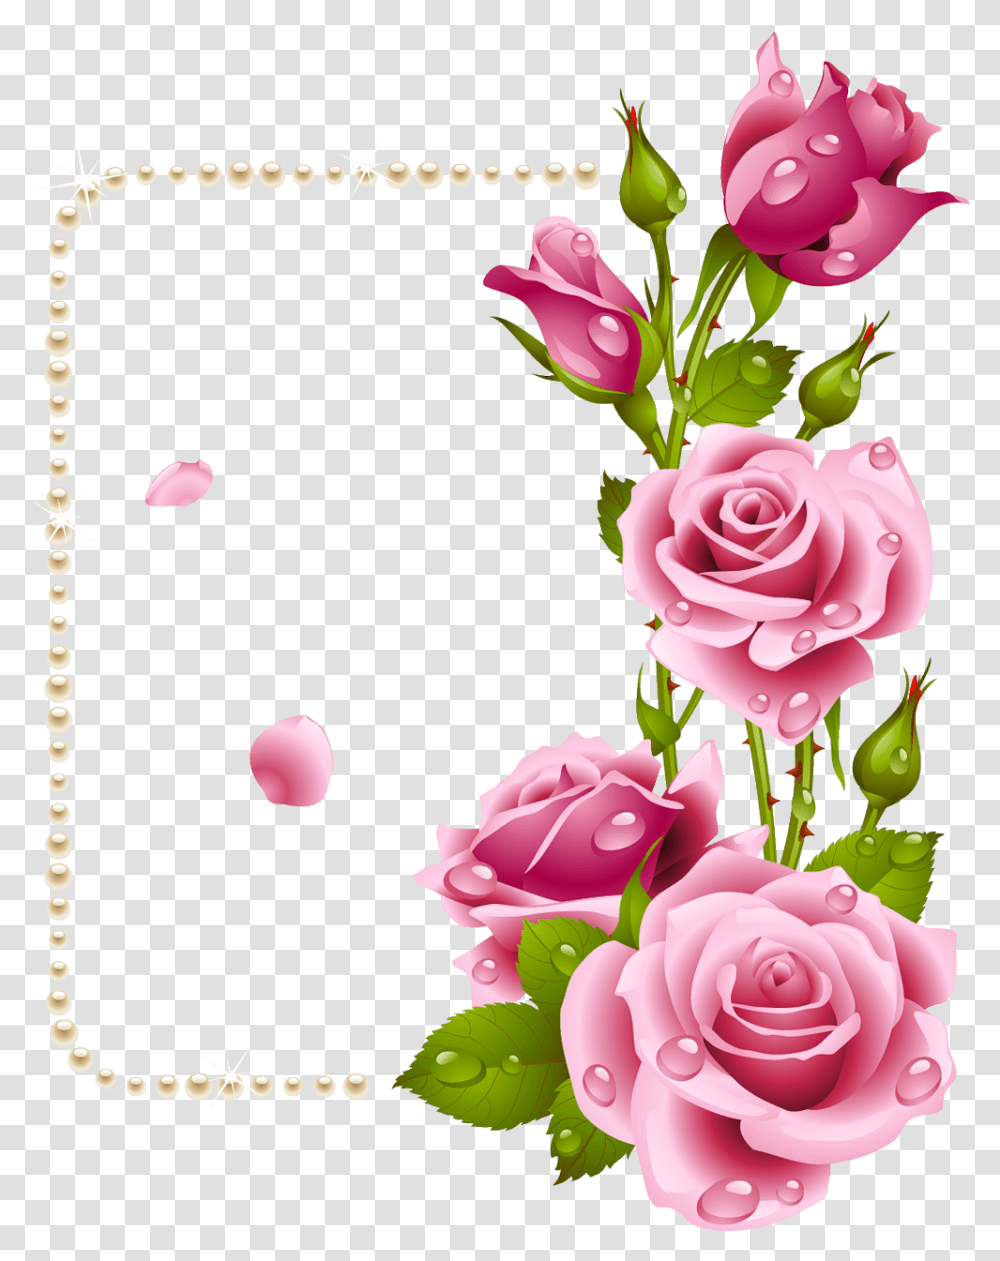 Download Rose Dil Good Morning Full Size Image Pngkit Garden Rose Wallpaper Flower, Plant, Graphics, Art, Blossom Transparent Png